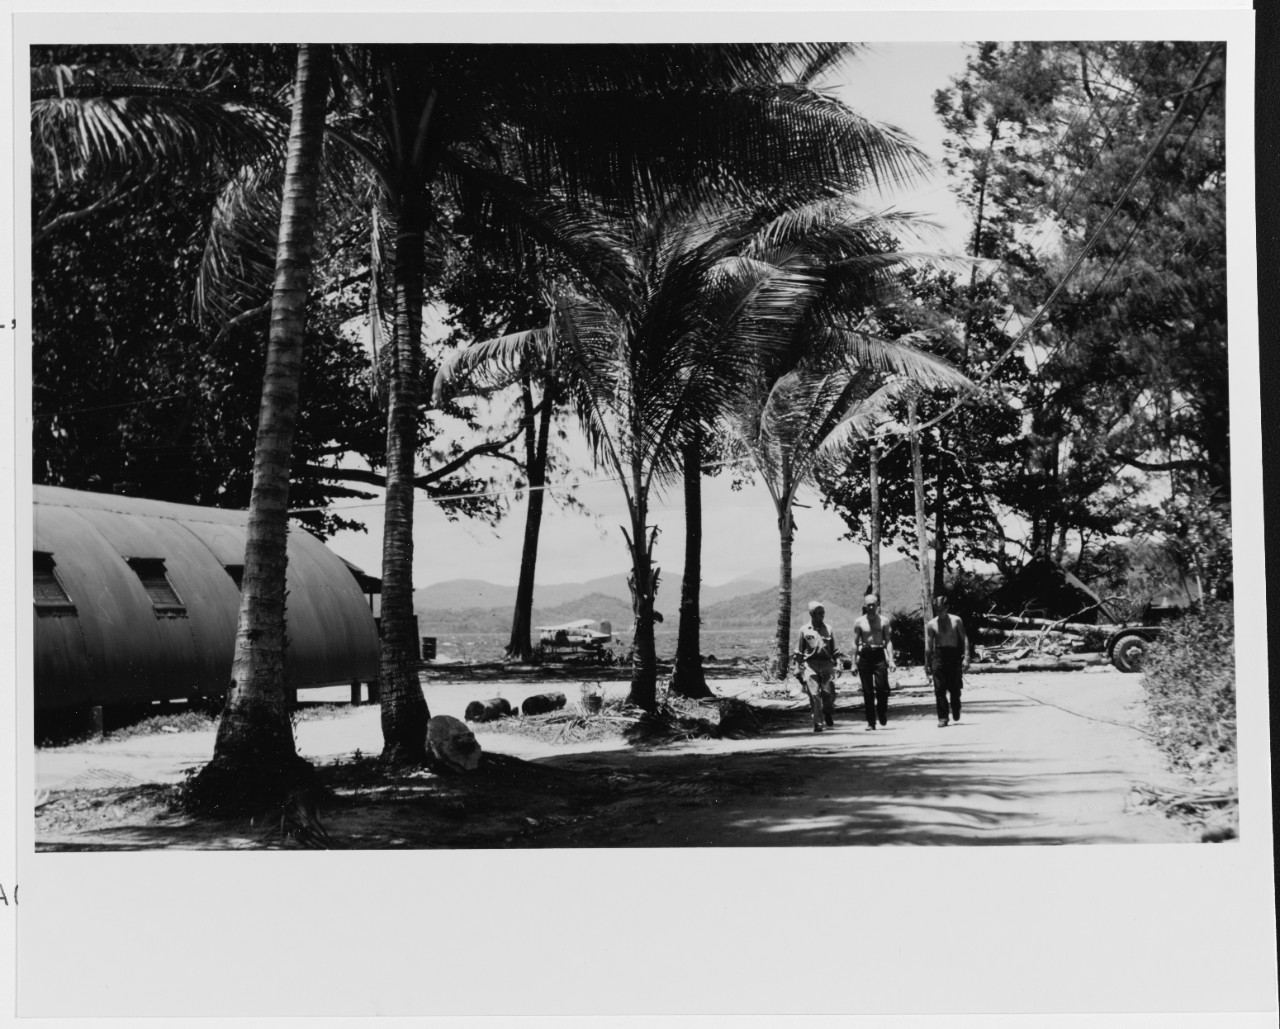 Activities of a night-flying PBY Squadron, based at Samarai Island, Milne Bay, New Guinea, circa 1943-44